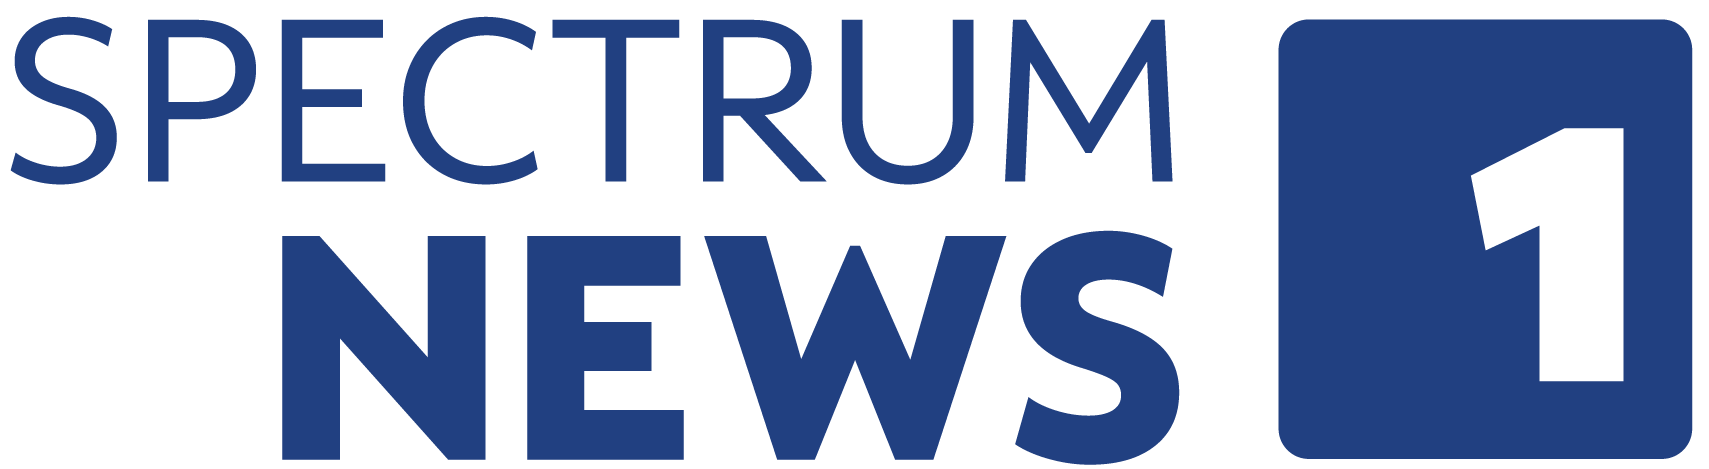 Spectrum News 1 logo